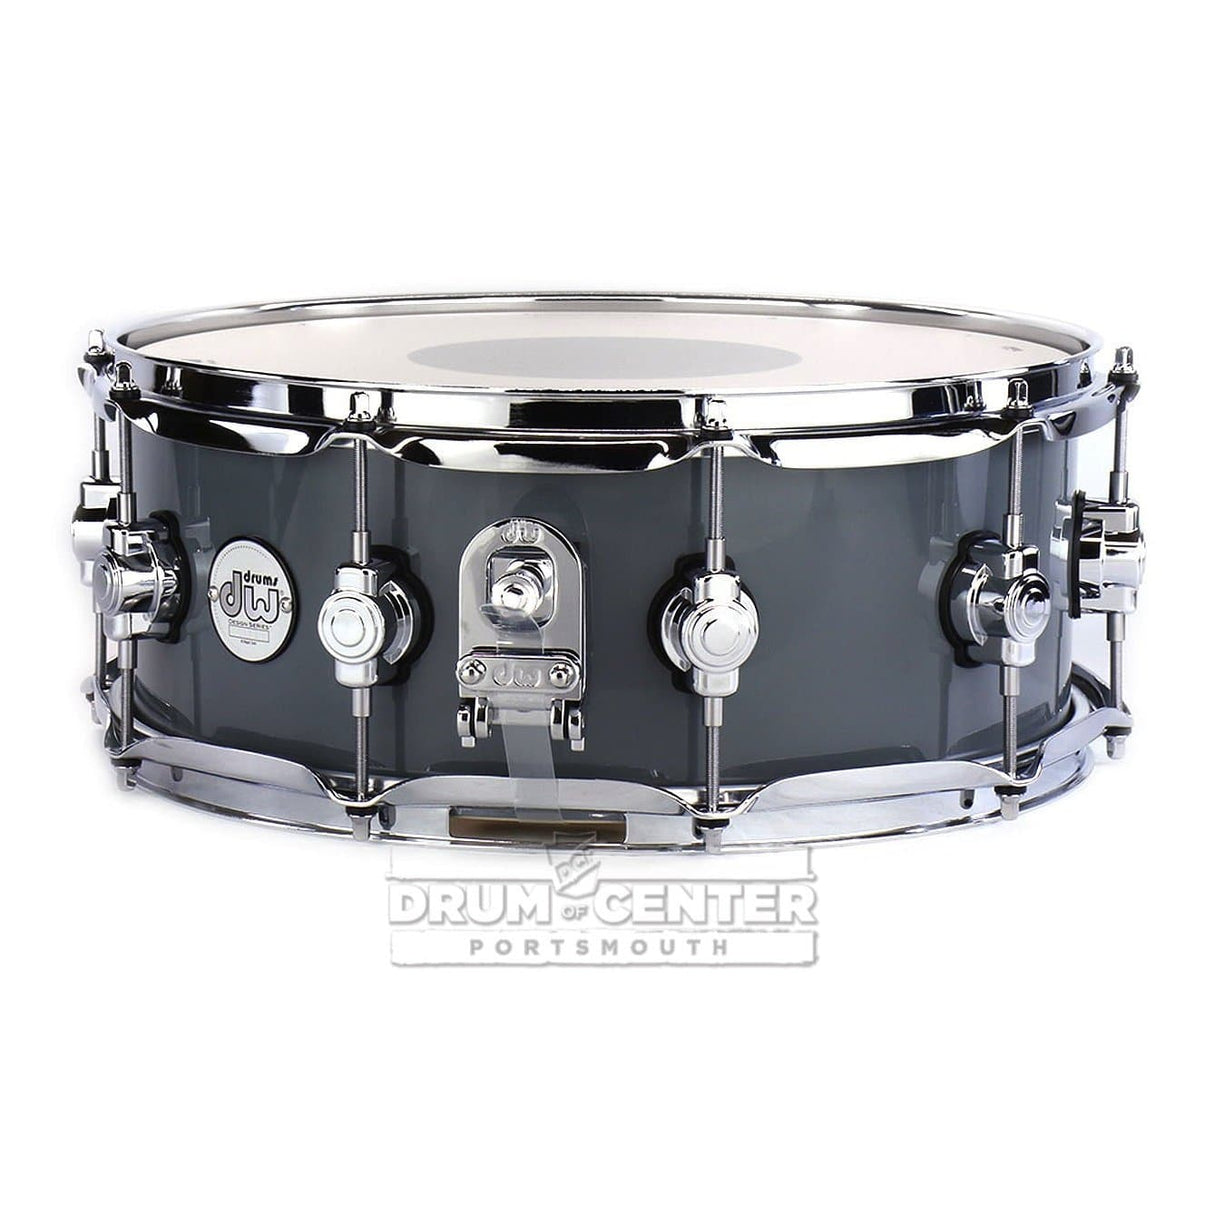 DW Design 14x5.5 Snare Drum - Steel Gray